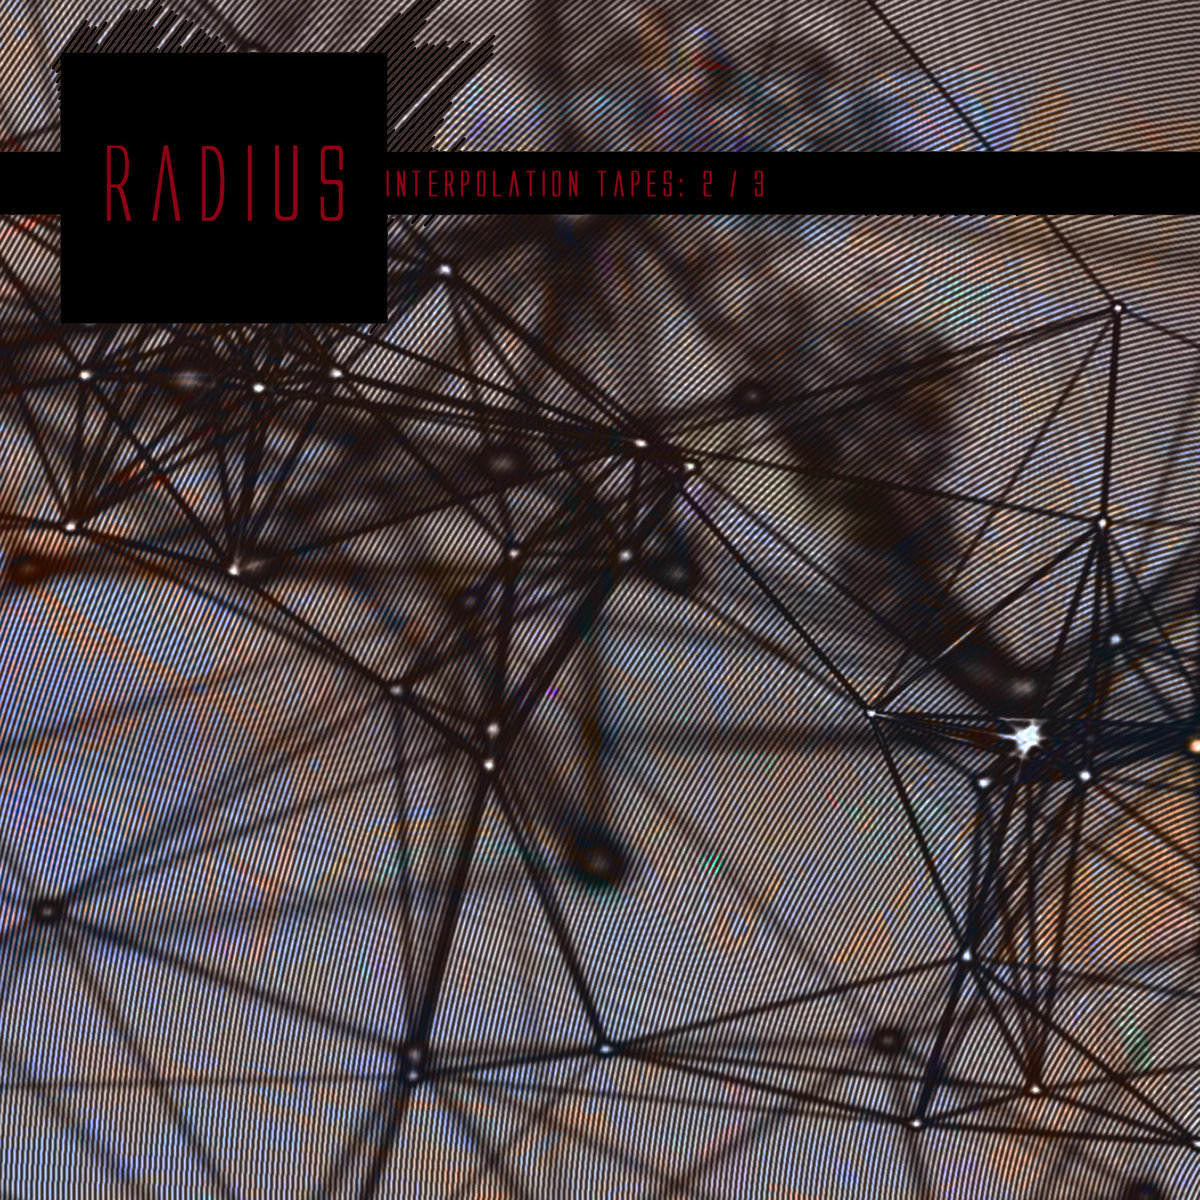 Radius – Interpolation Tapes [Restoration Two]